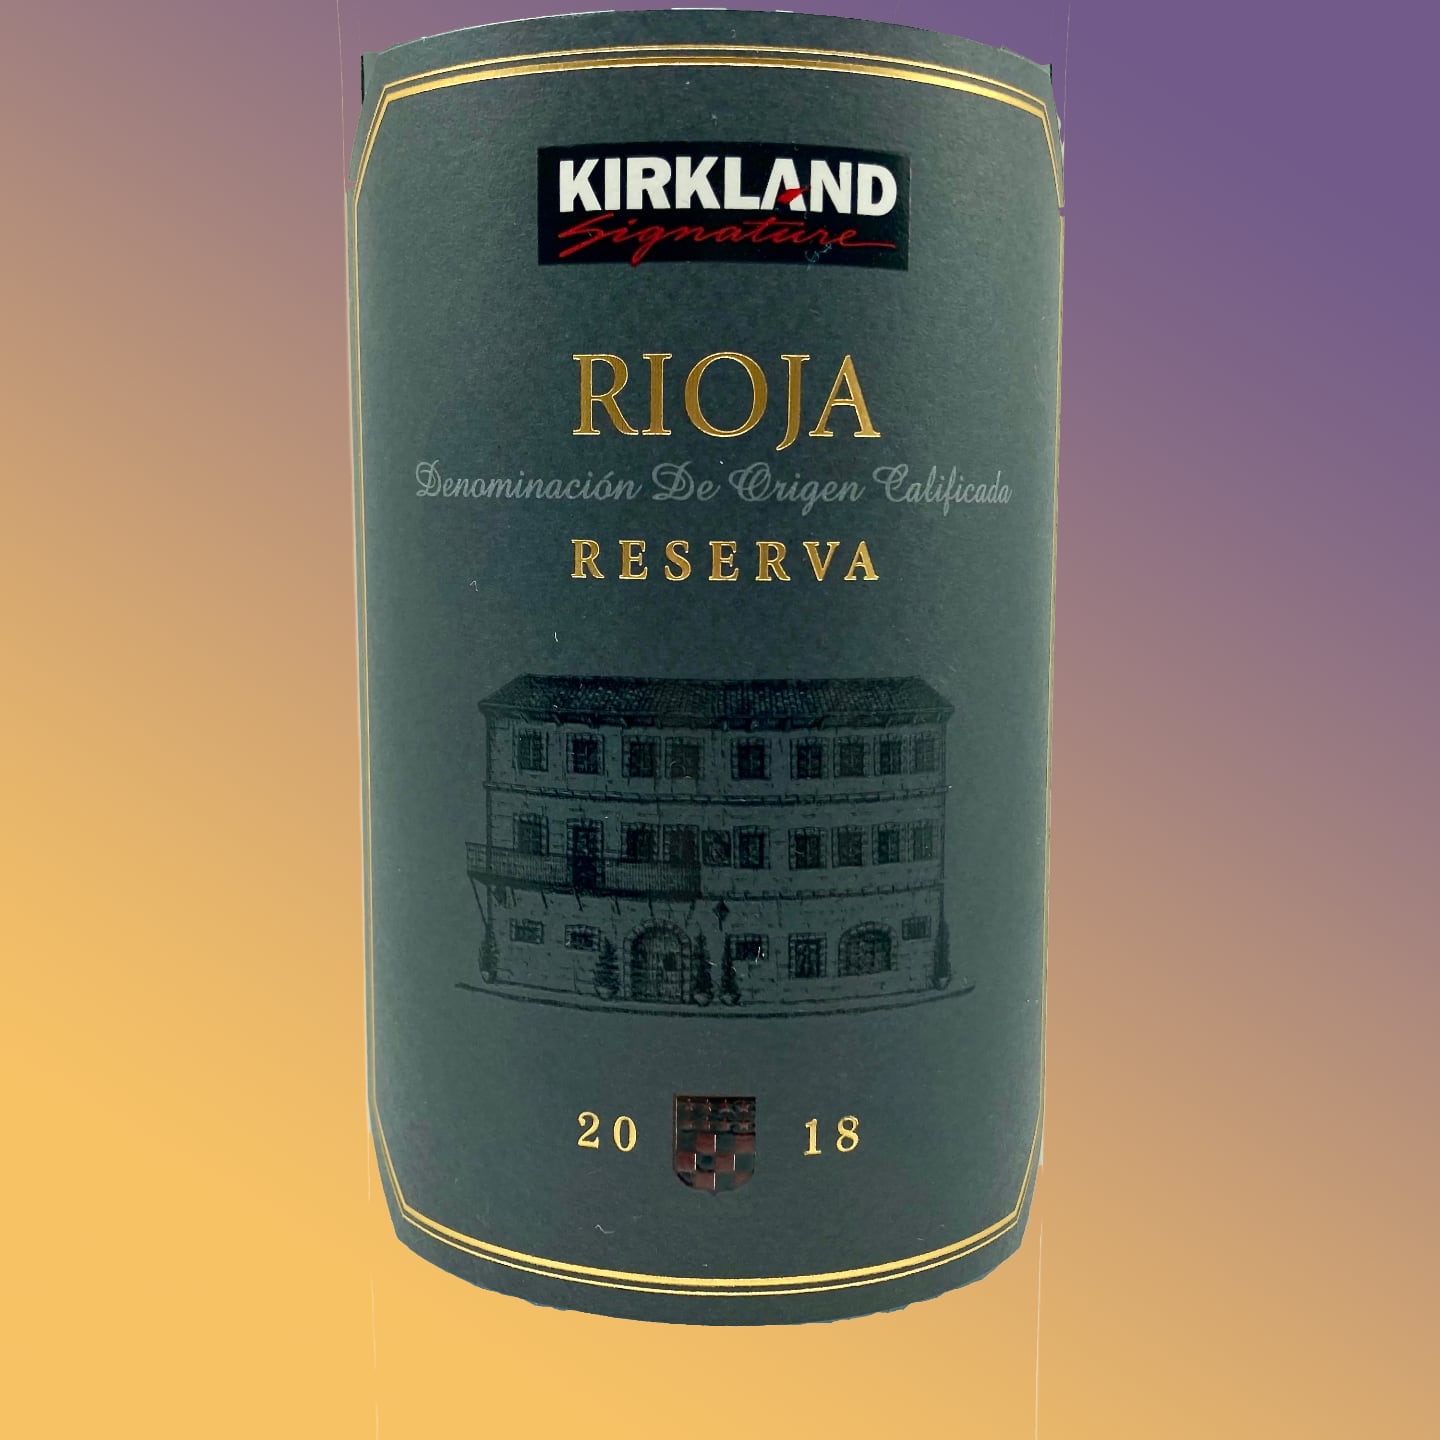 Kirkland Signature Rioja Reserva 2018